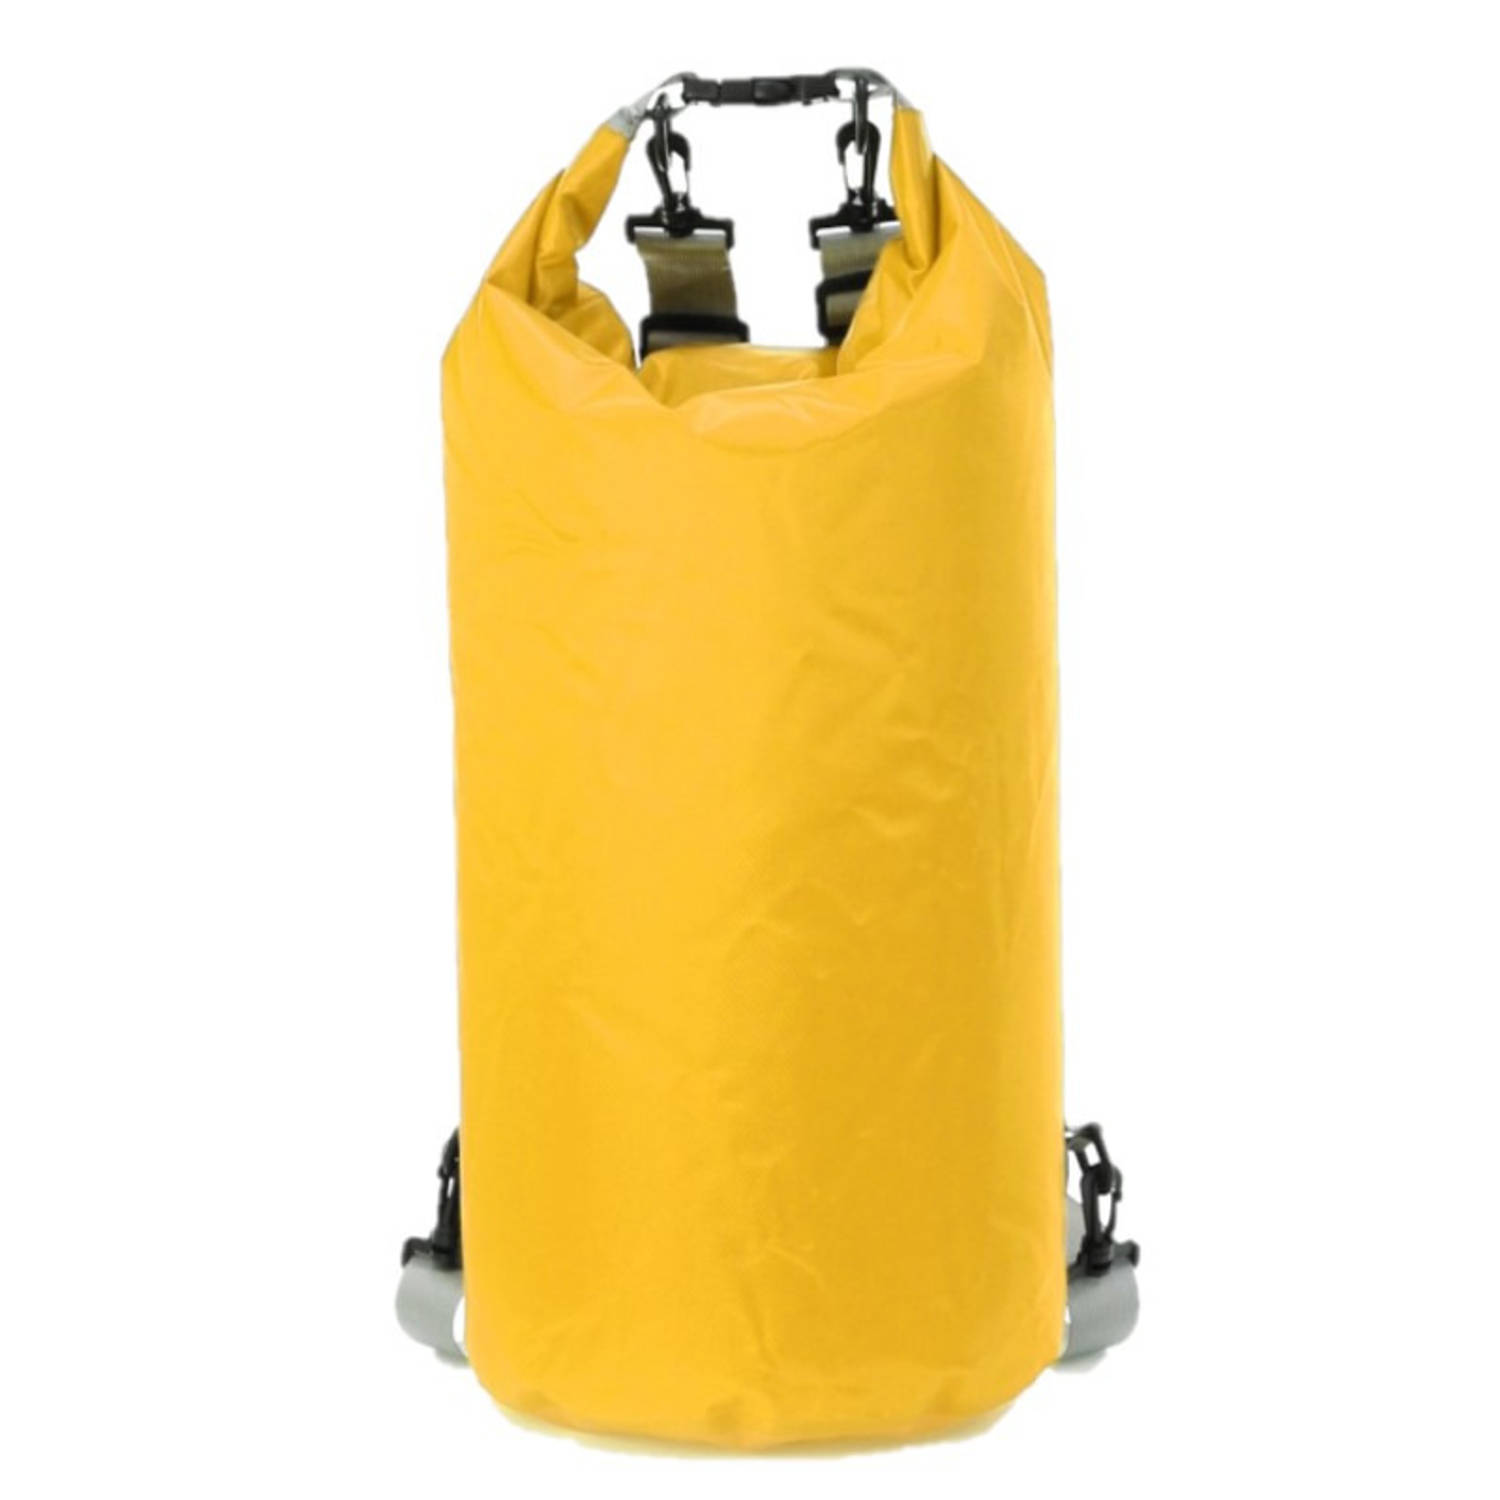 Waterdichte duffel bag/plunjezak 20 liter geel - Reistas (volwassen)